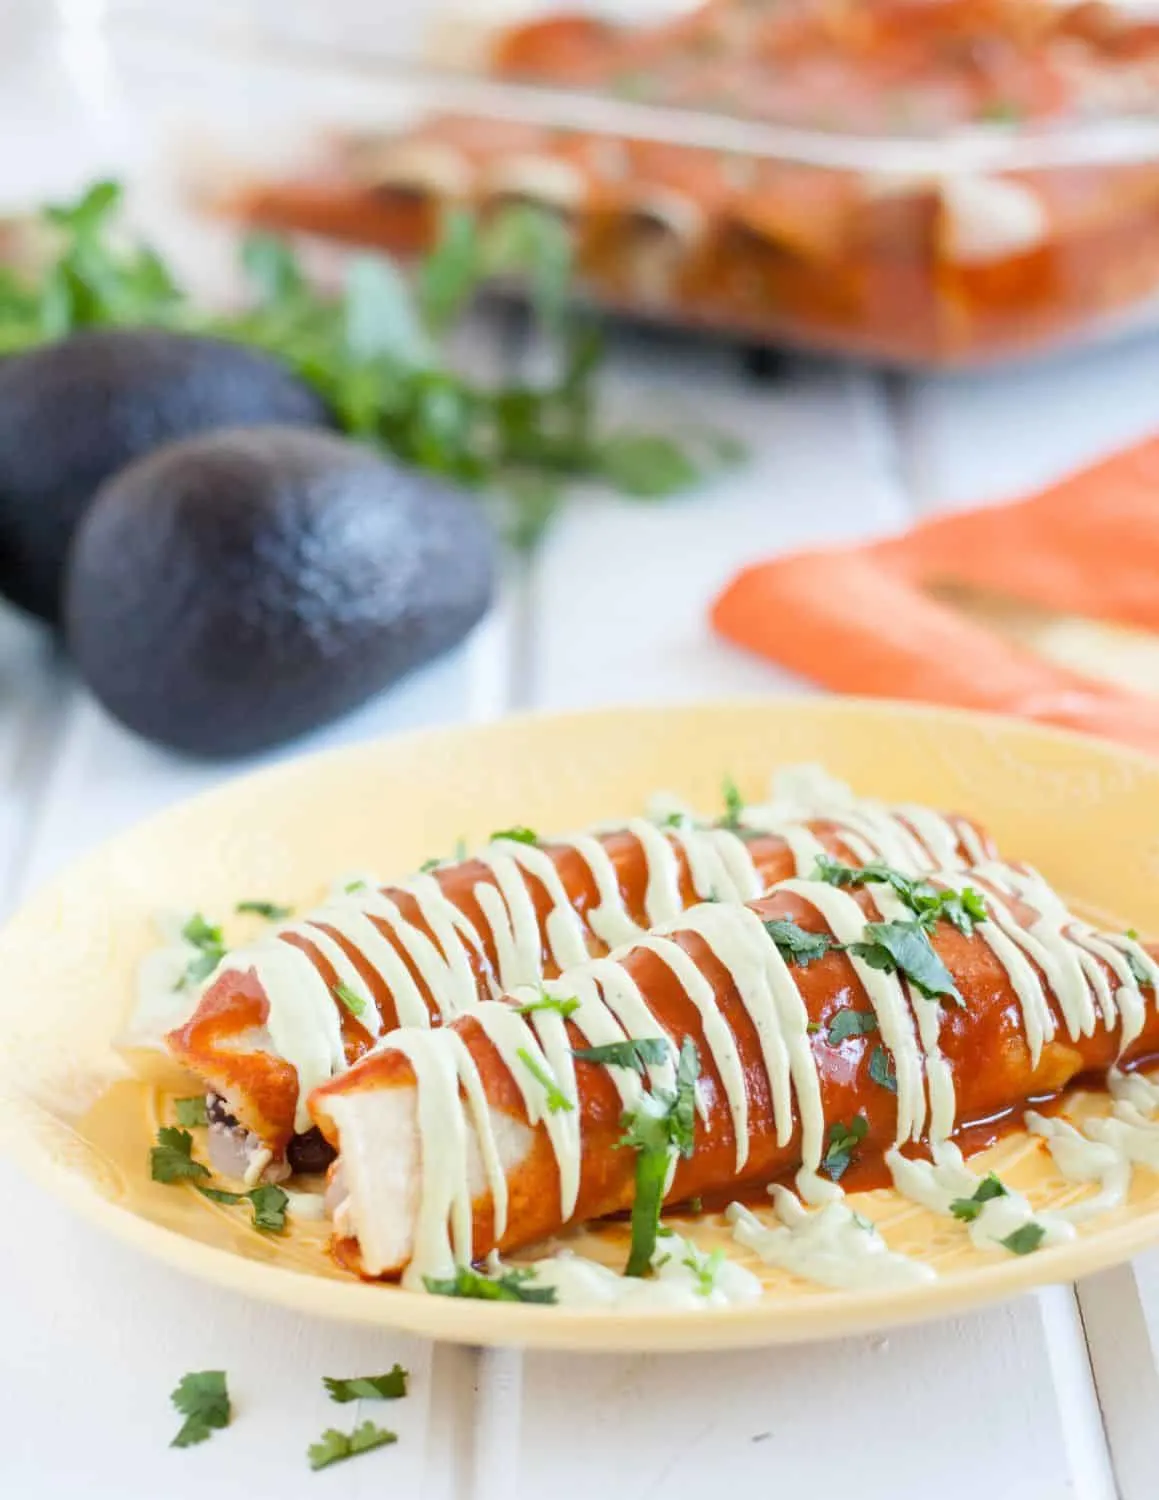 Vegan breakfast enchiladas! A delicious, savory vegan breakfast recipe that's so good, even 